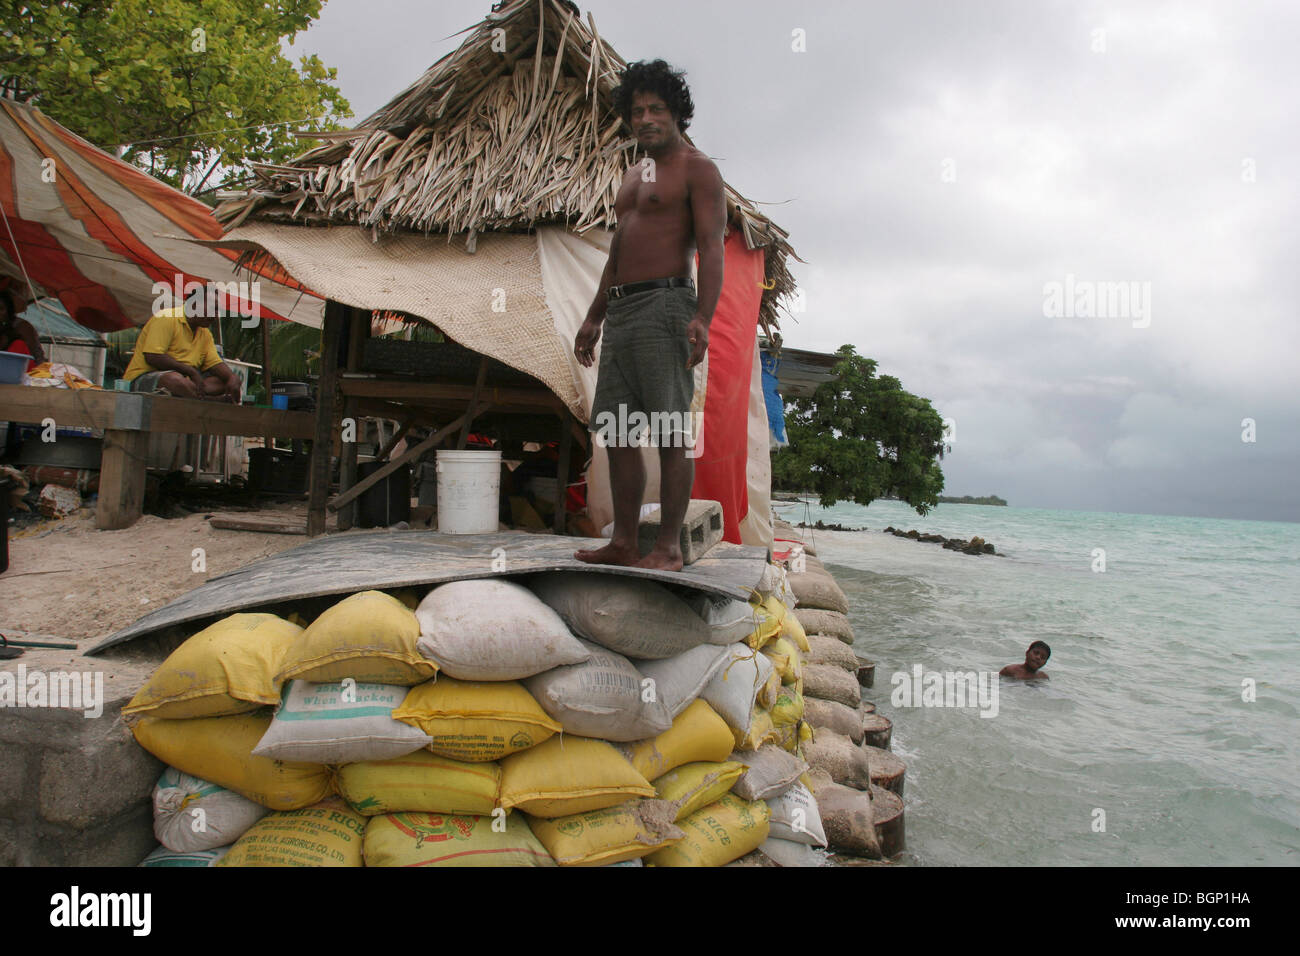 Protection against rising sea levels on Kiribati atoll. Stock Photo